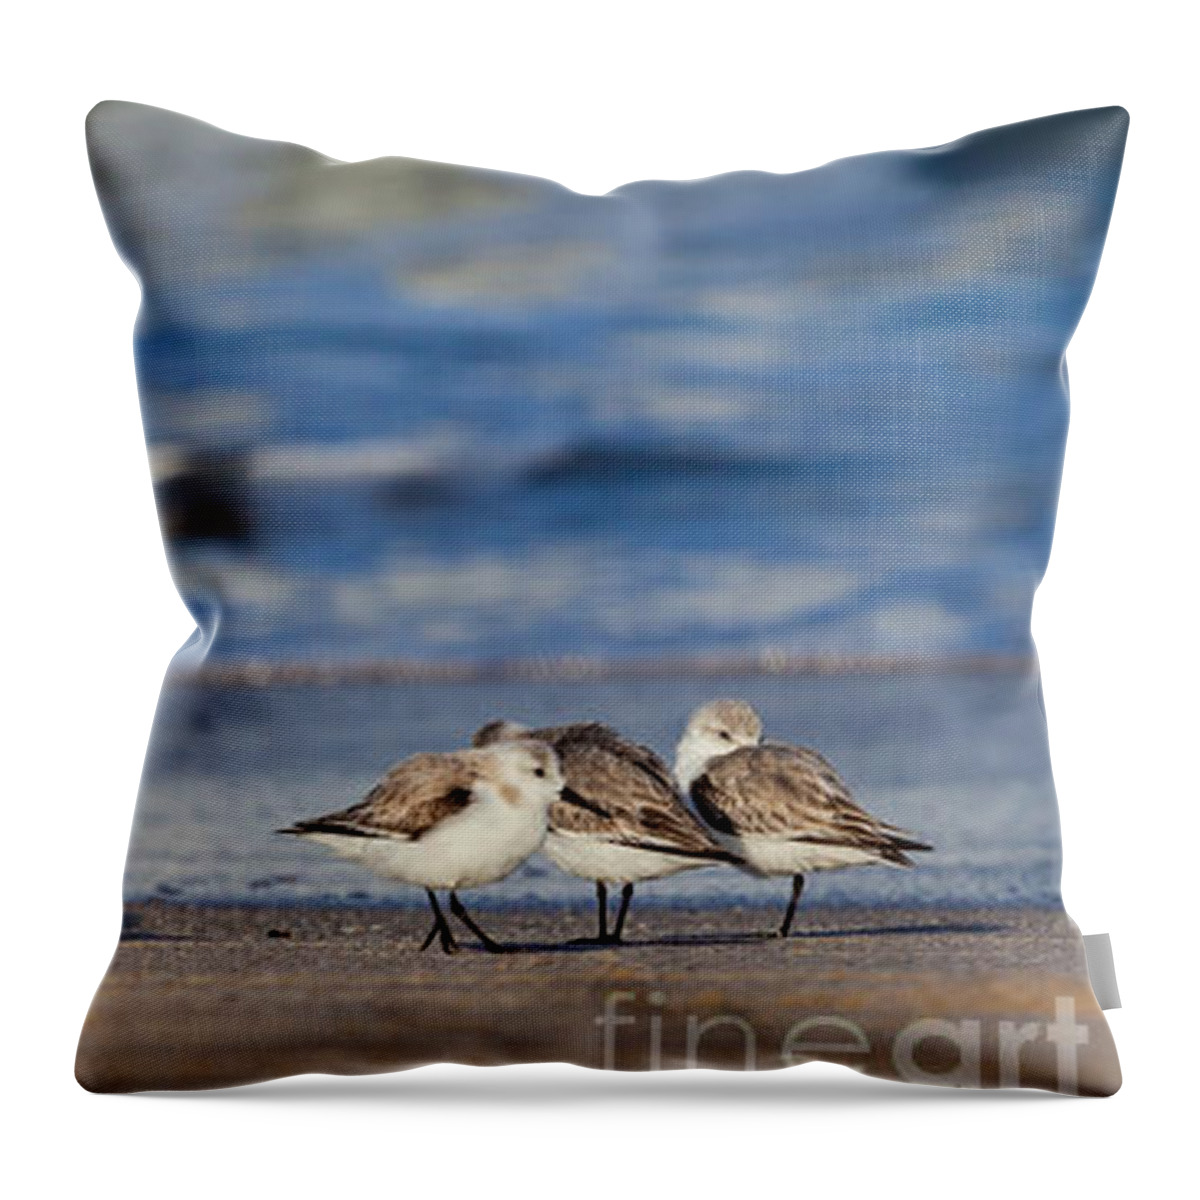 Sleepy Shorebirds Throw Pillow featuring the photograph Sleepy Shorebirds by Michelle Constantine